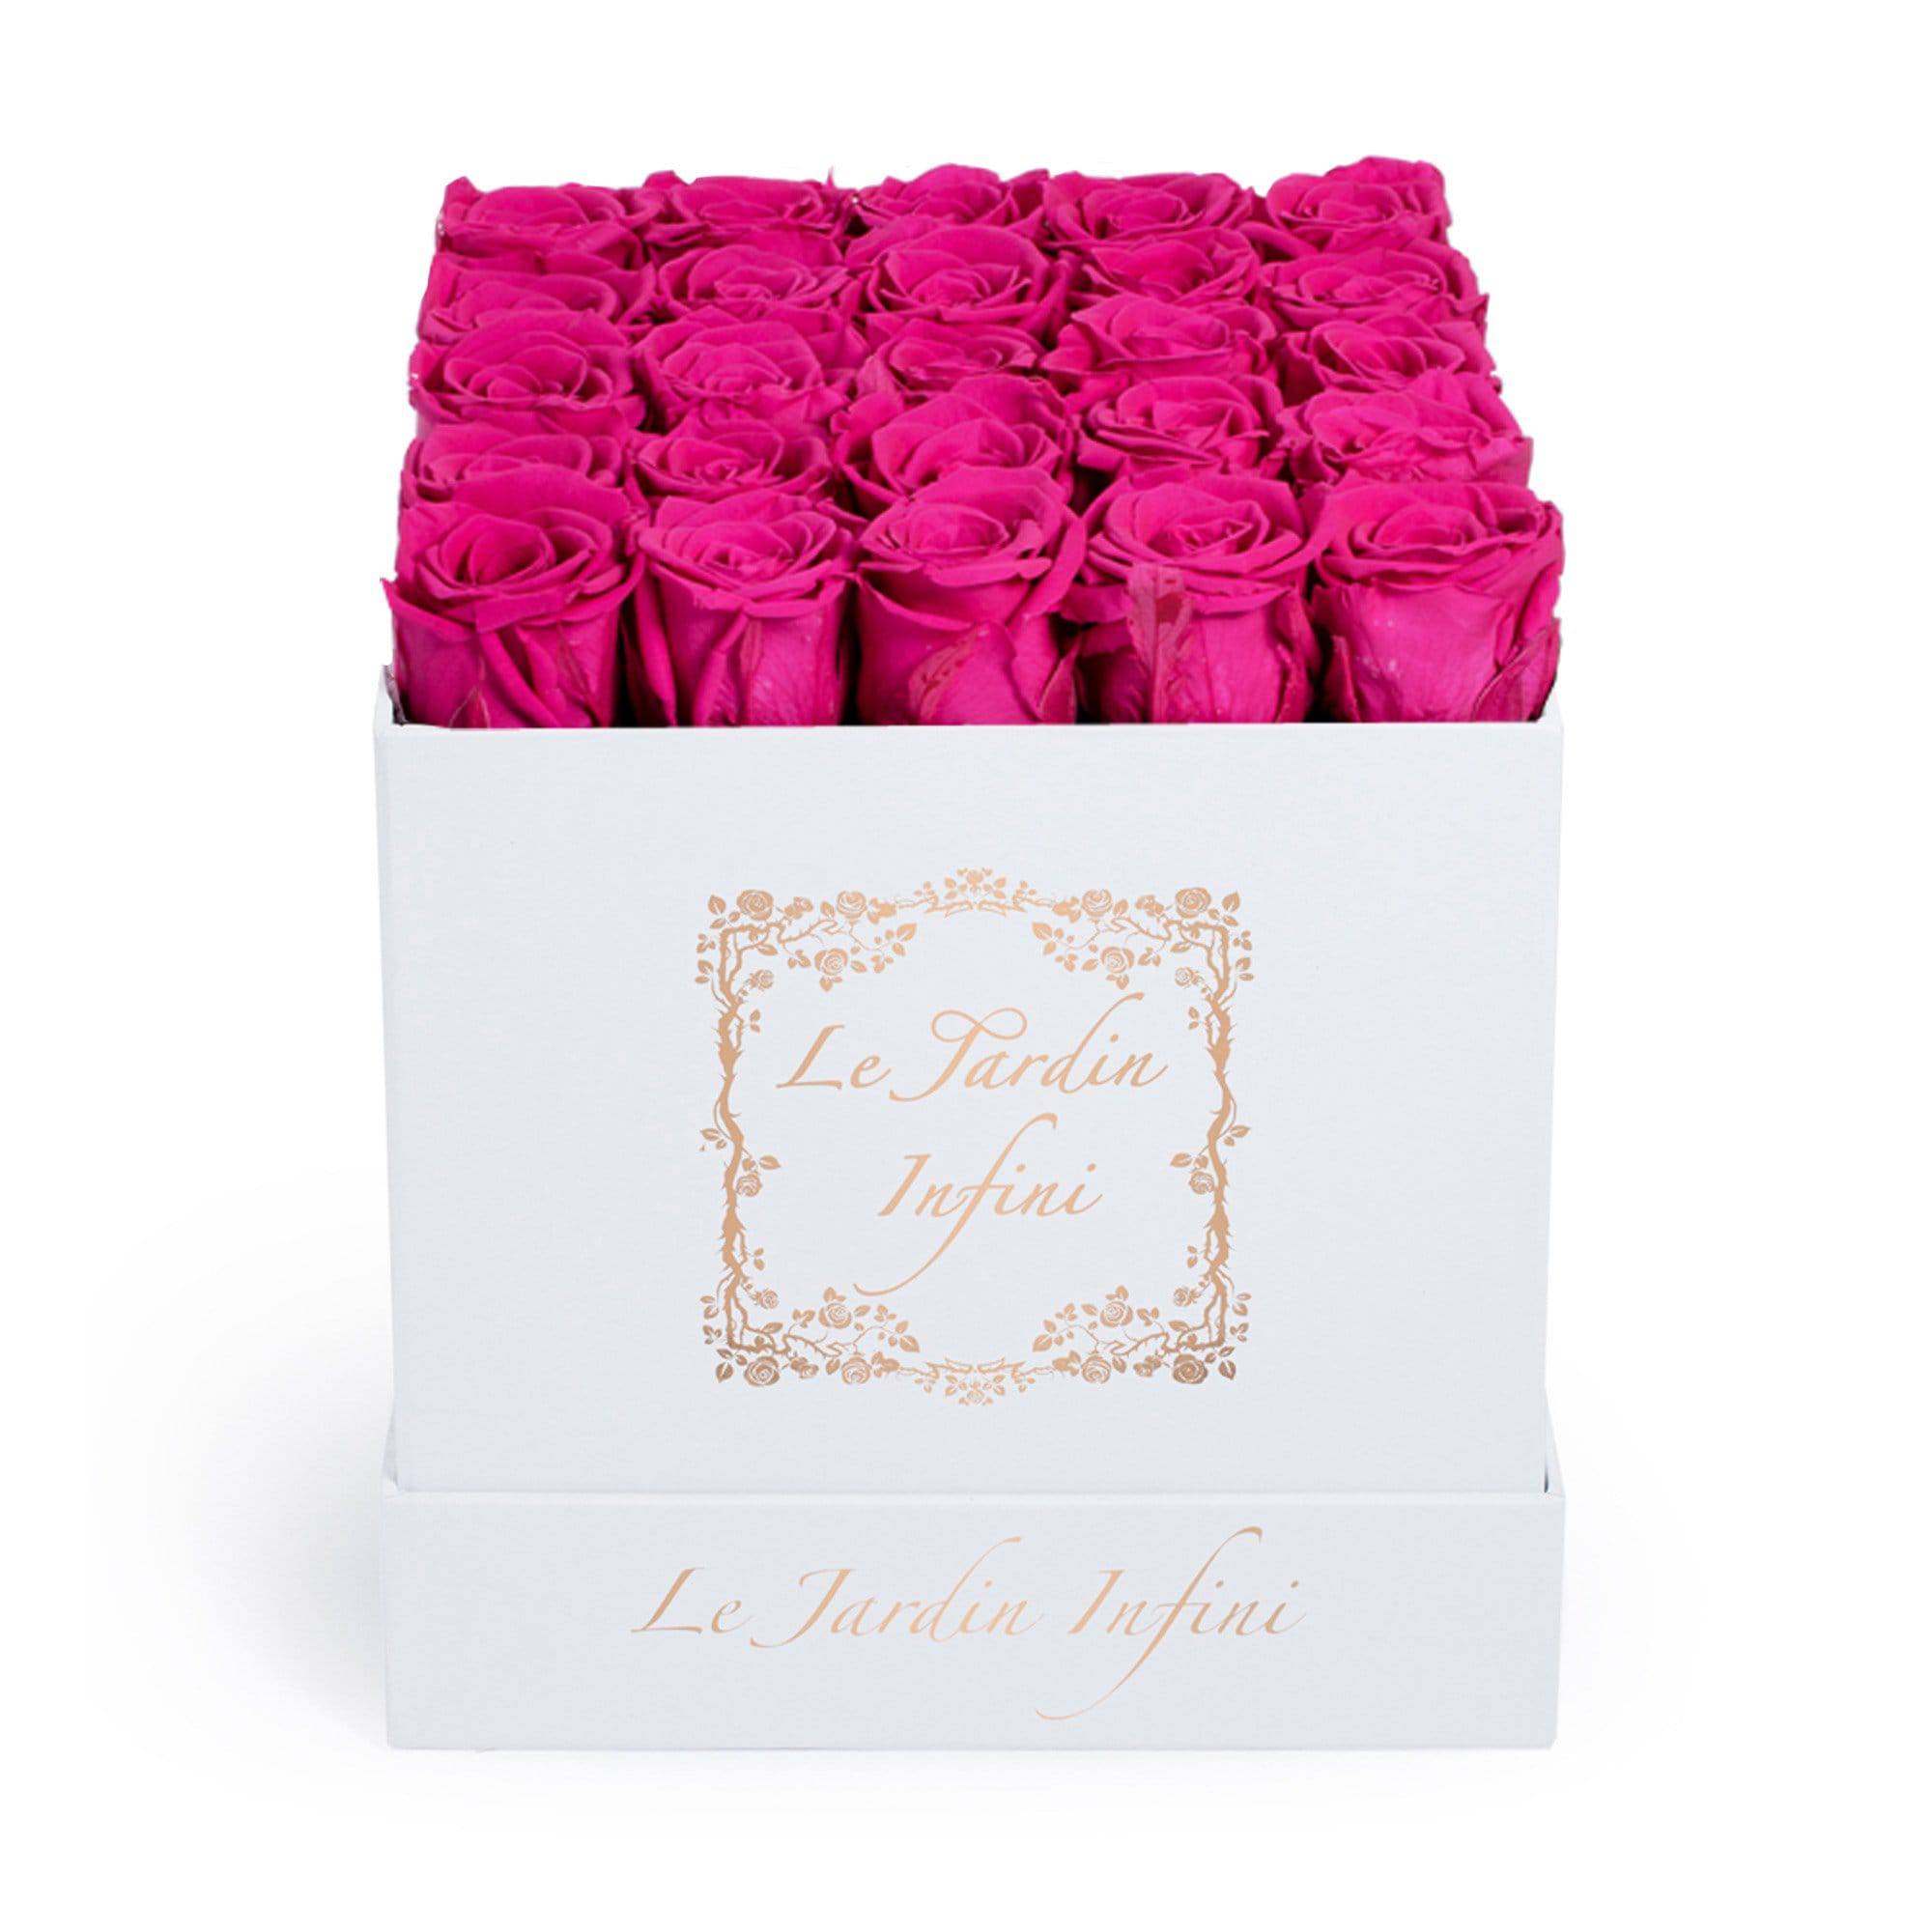 Hot Pink Preserved Roses - Medium Square White Box